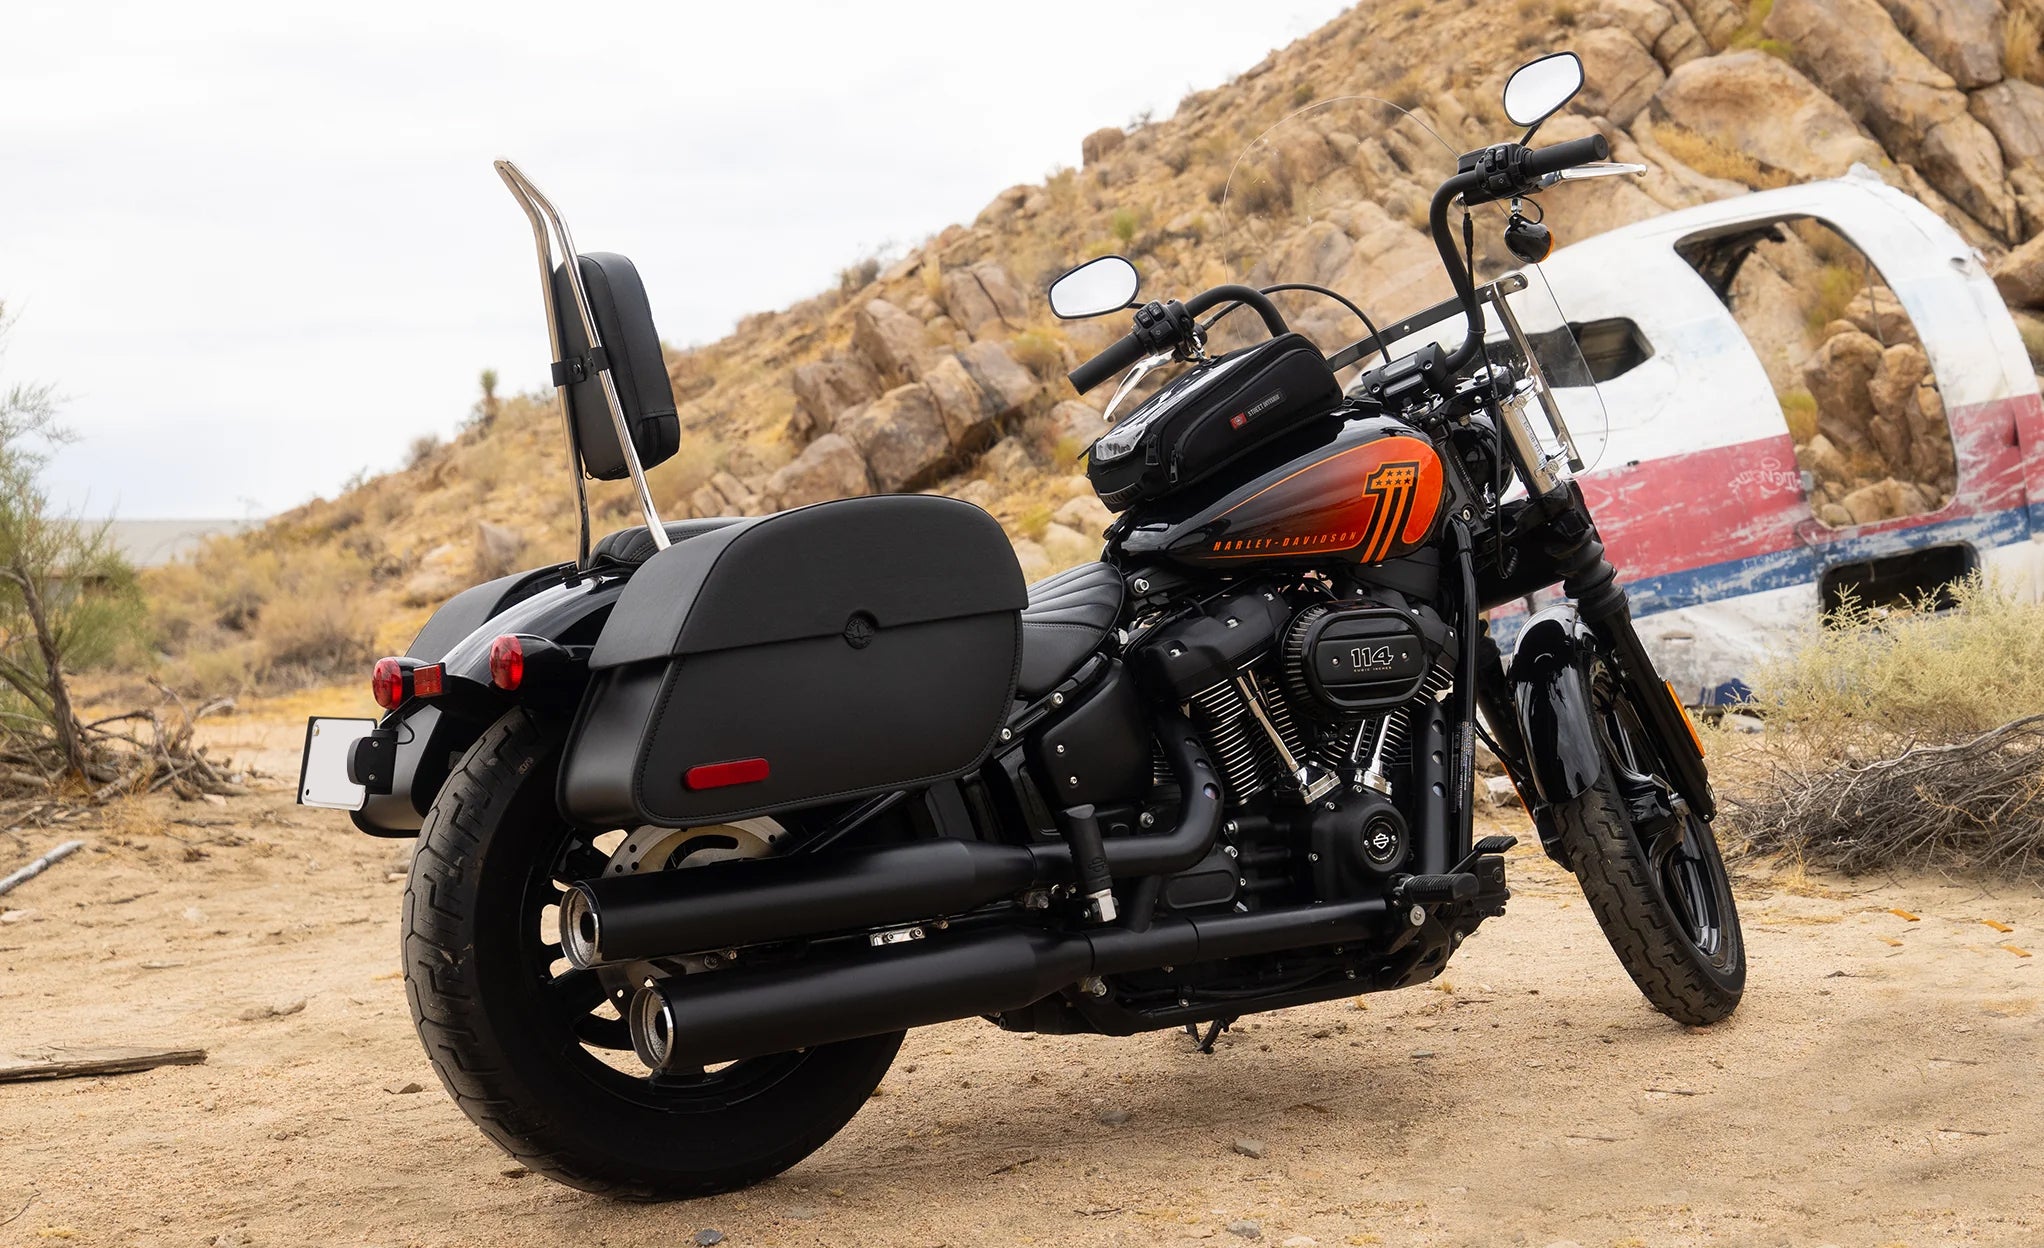 Viking Panzer Large Leather Motorcycle Saddlebags For Harley Davidson Softail Street Bob Fxbb @expand